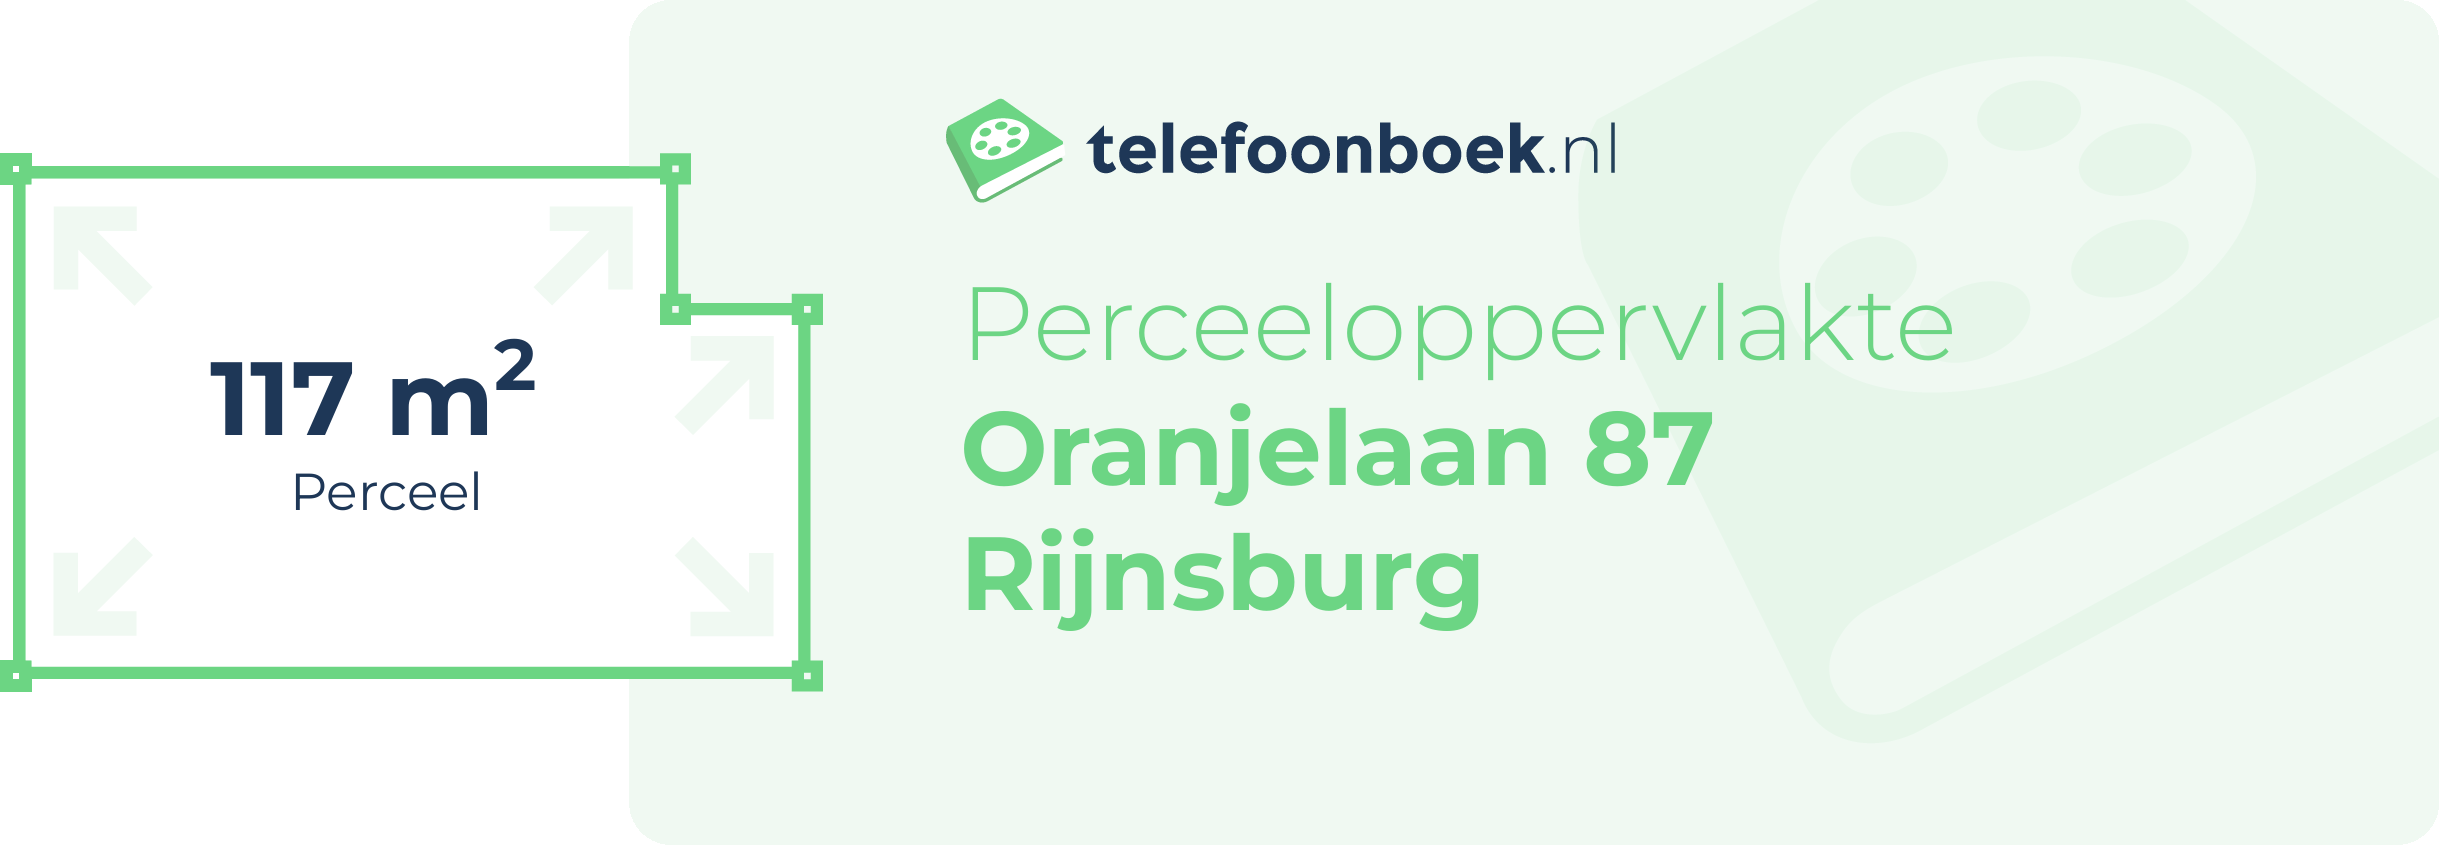 Perceeloppervlakte Oranjelaan 87 Rijnsburg